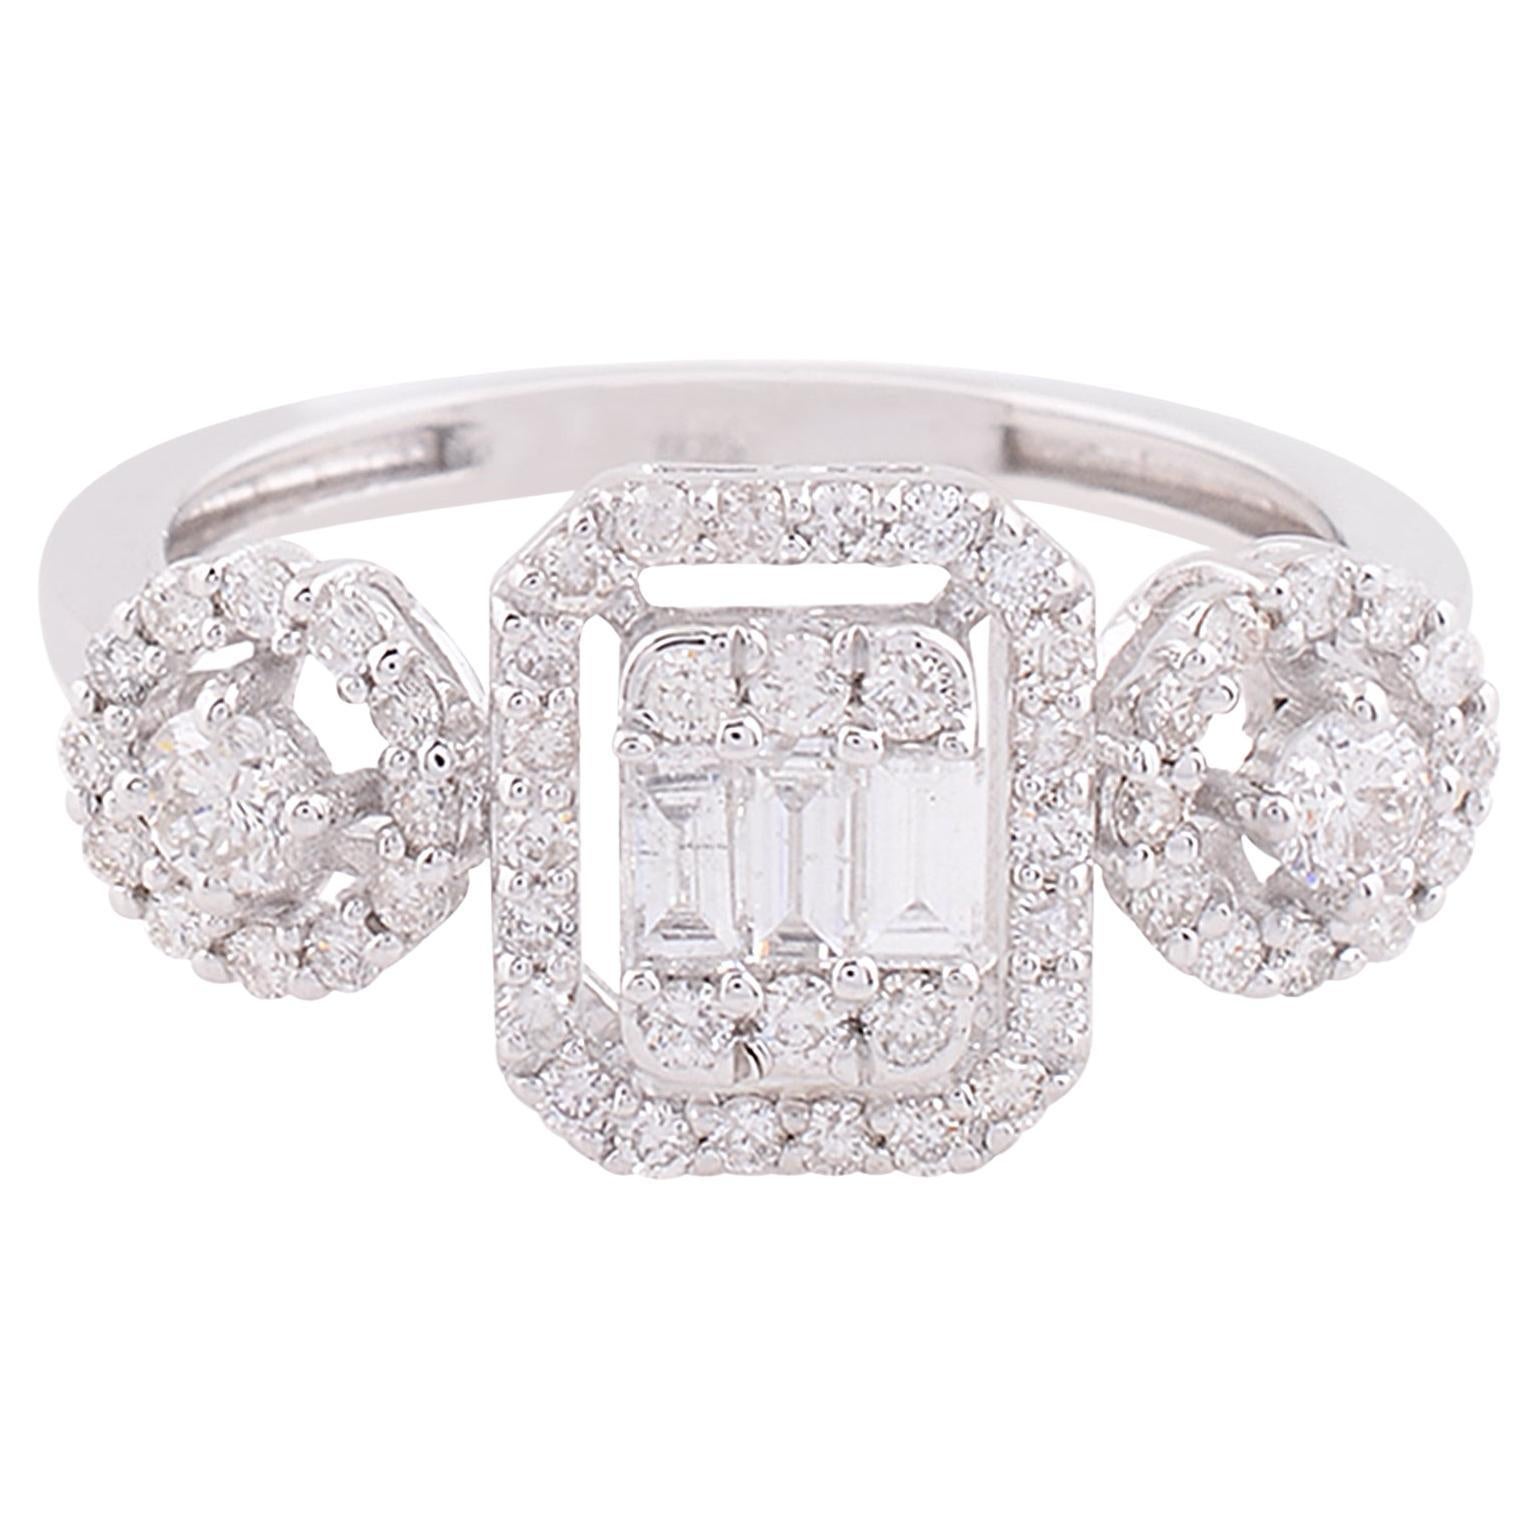 0.76 Carat SI Clarity HI Color Baguette Diamond Ring 18 Karat White Gold Jewelry